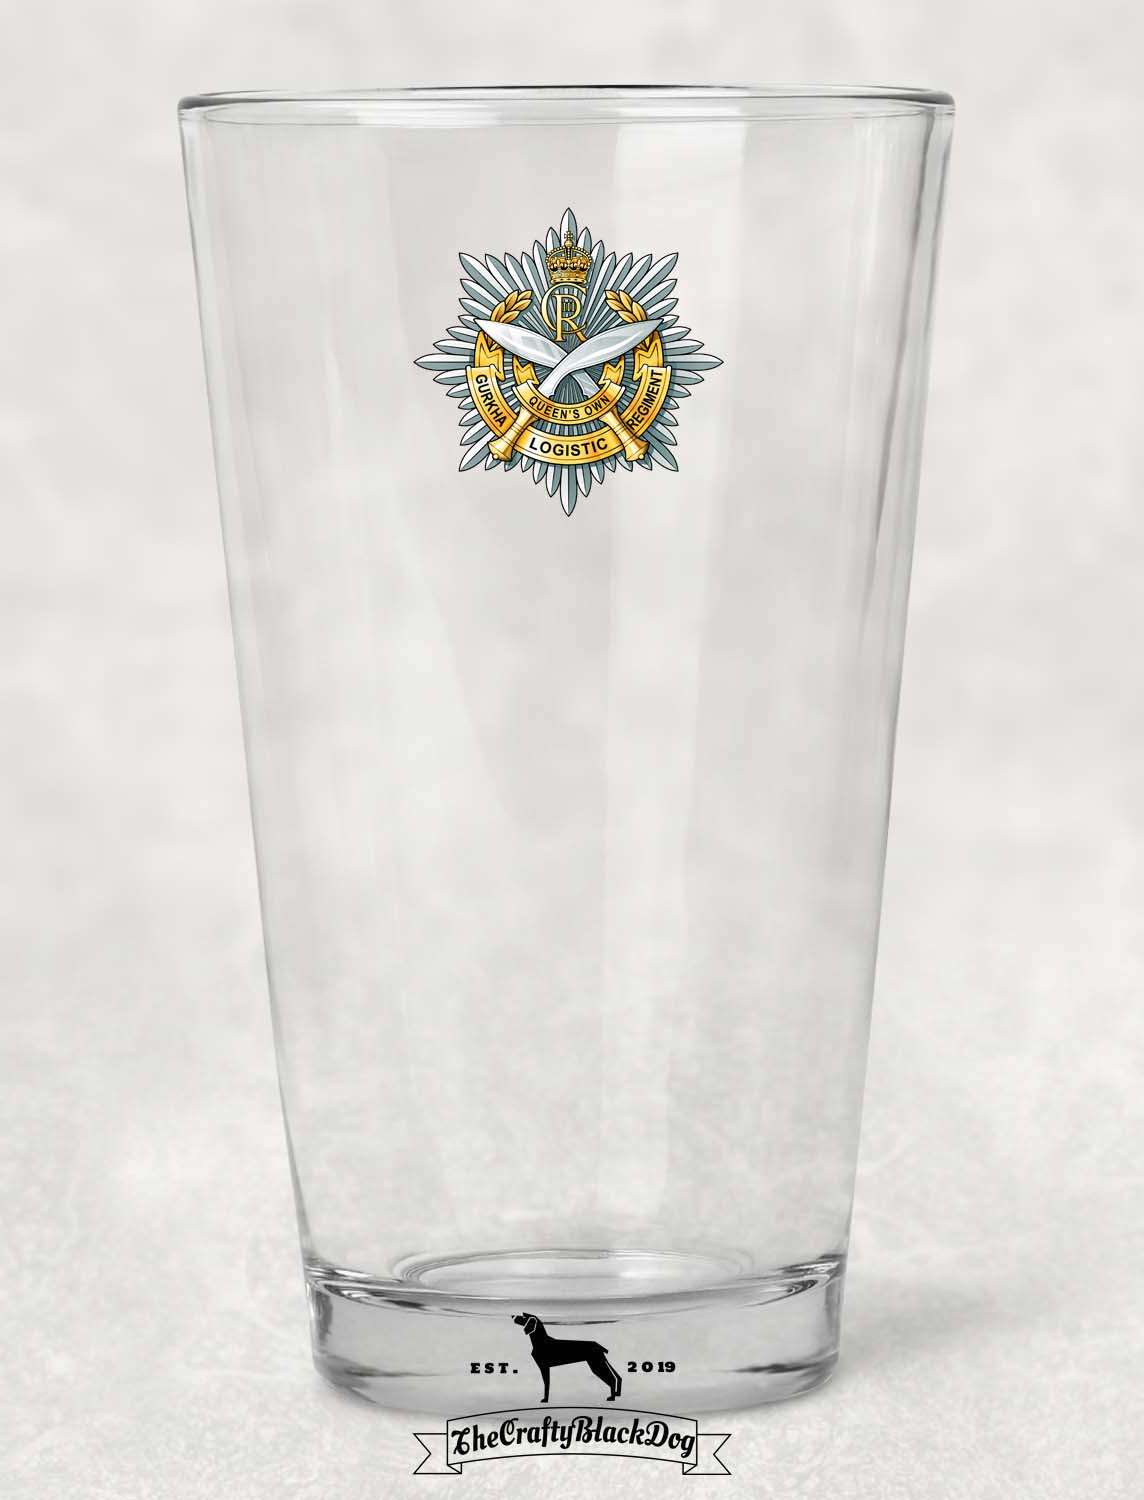 Queen's Own Gurkha Logistic Regiment RLC - Pint Glass (New King's Crown)